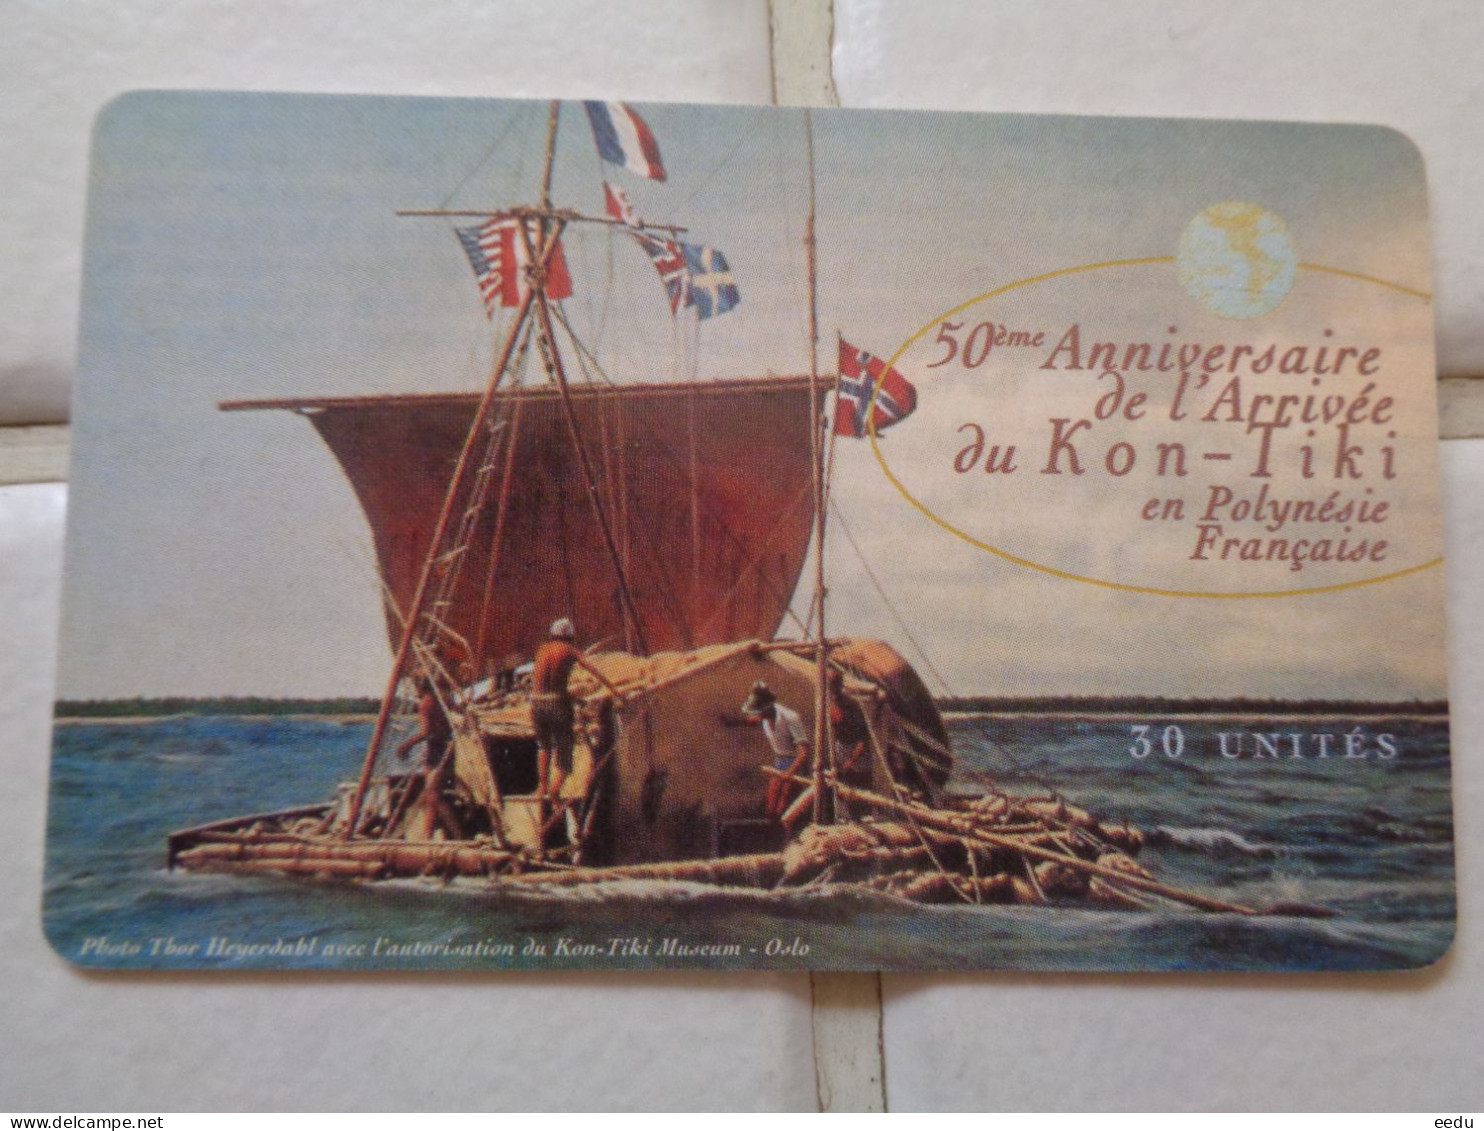 French Polynesia Phonecard - Französisch-Polynesien